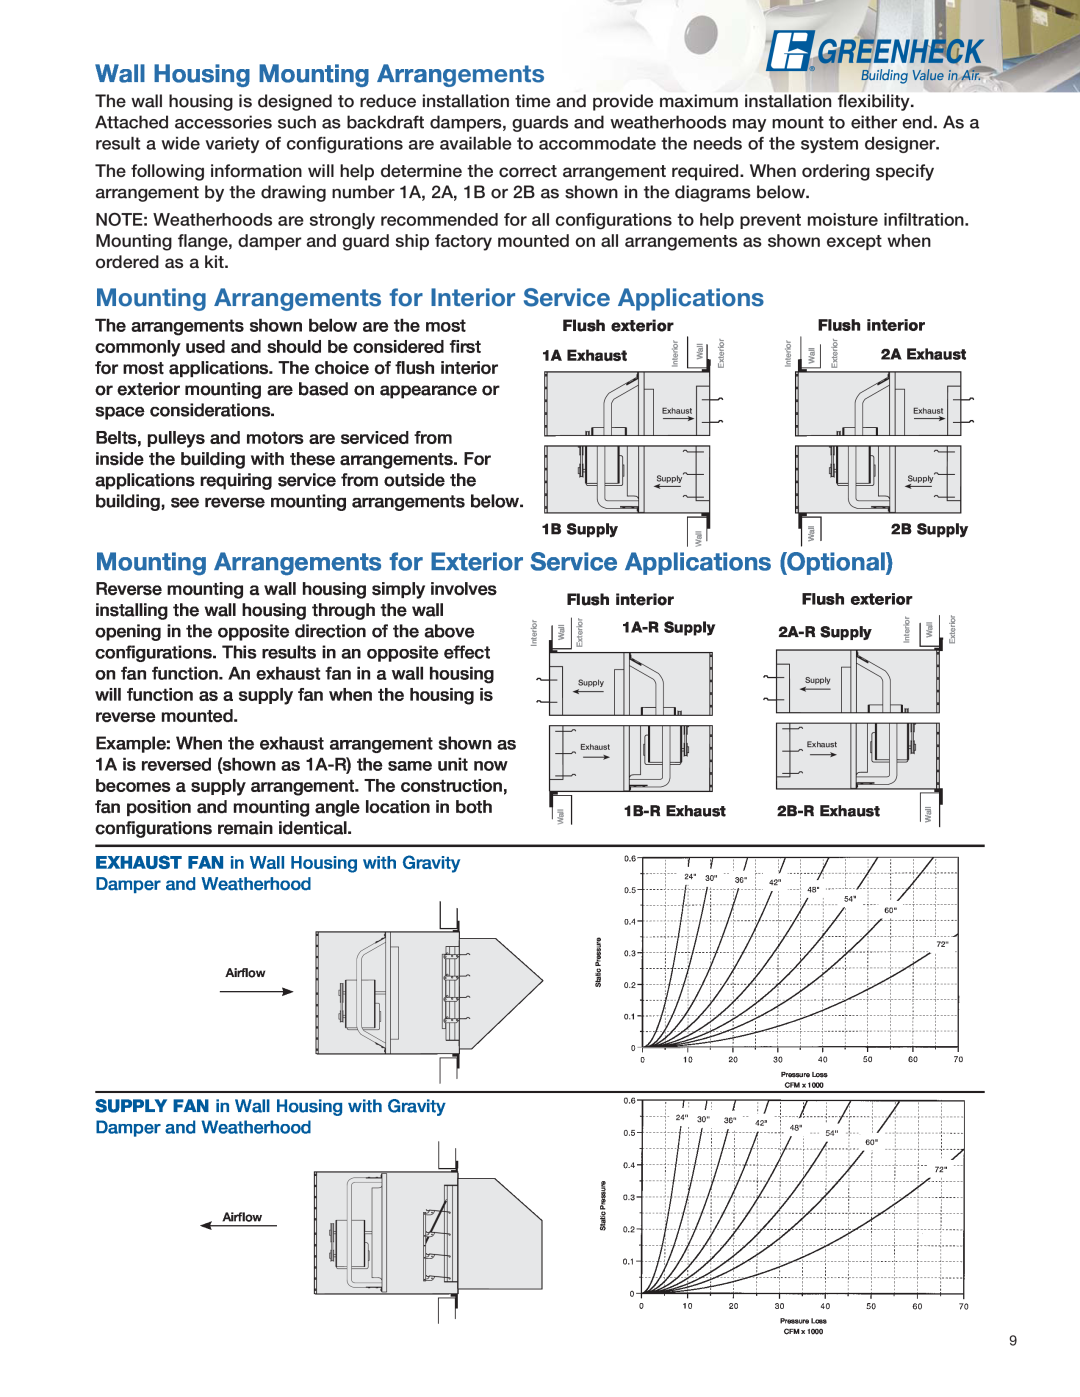 Greenheck Fan SE1, SS1 manual Wall Housing Mounting Arrangements, Mounting Arrangements for Interior Service Applications 